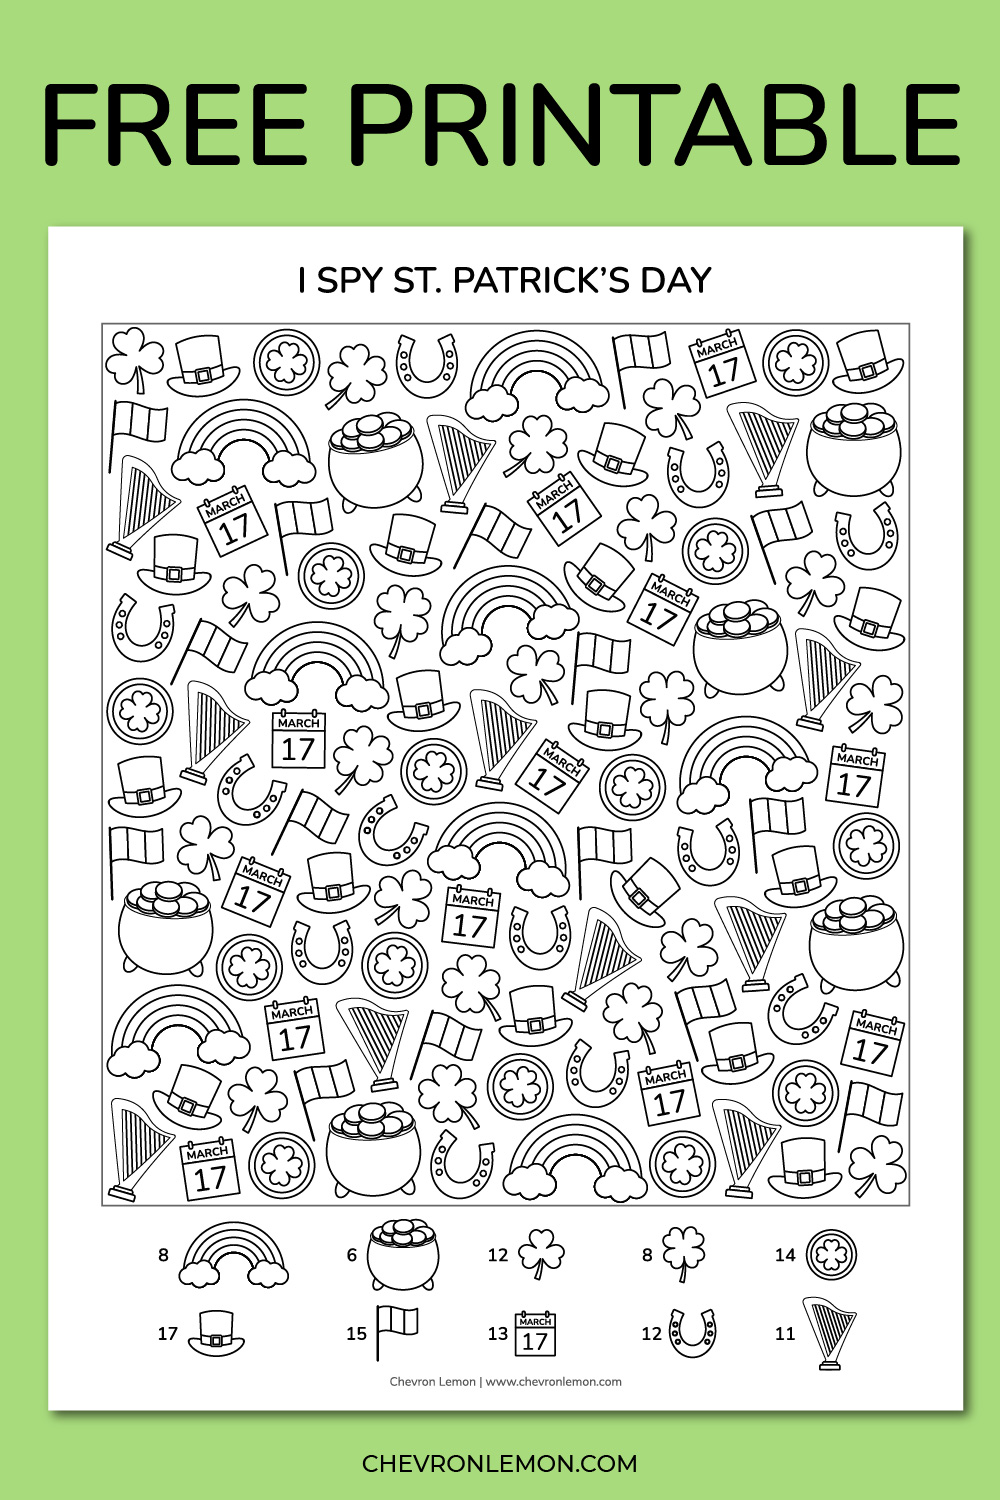 I spy St. Patrick's Day